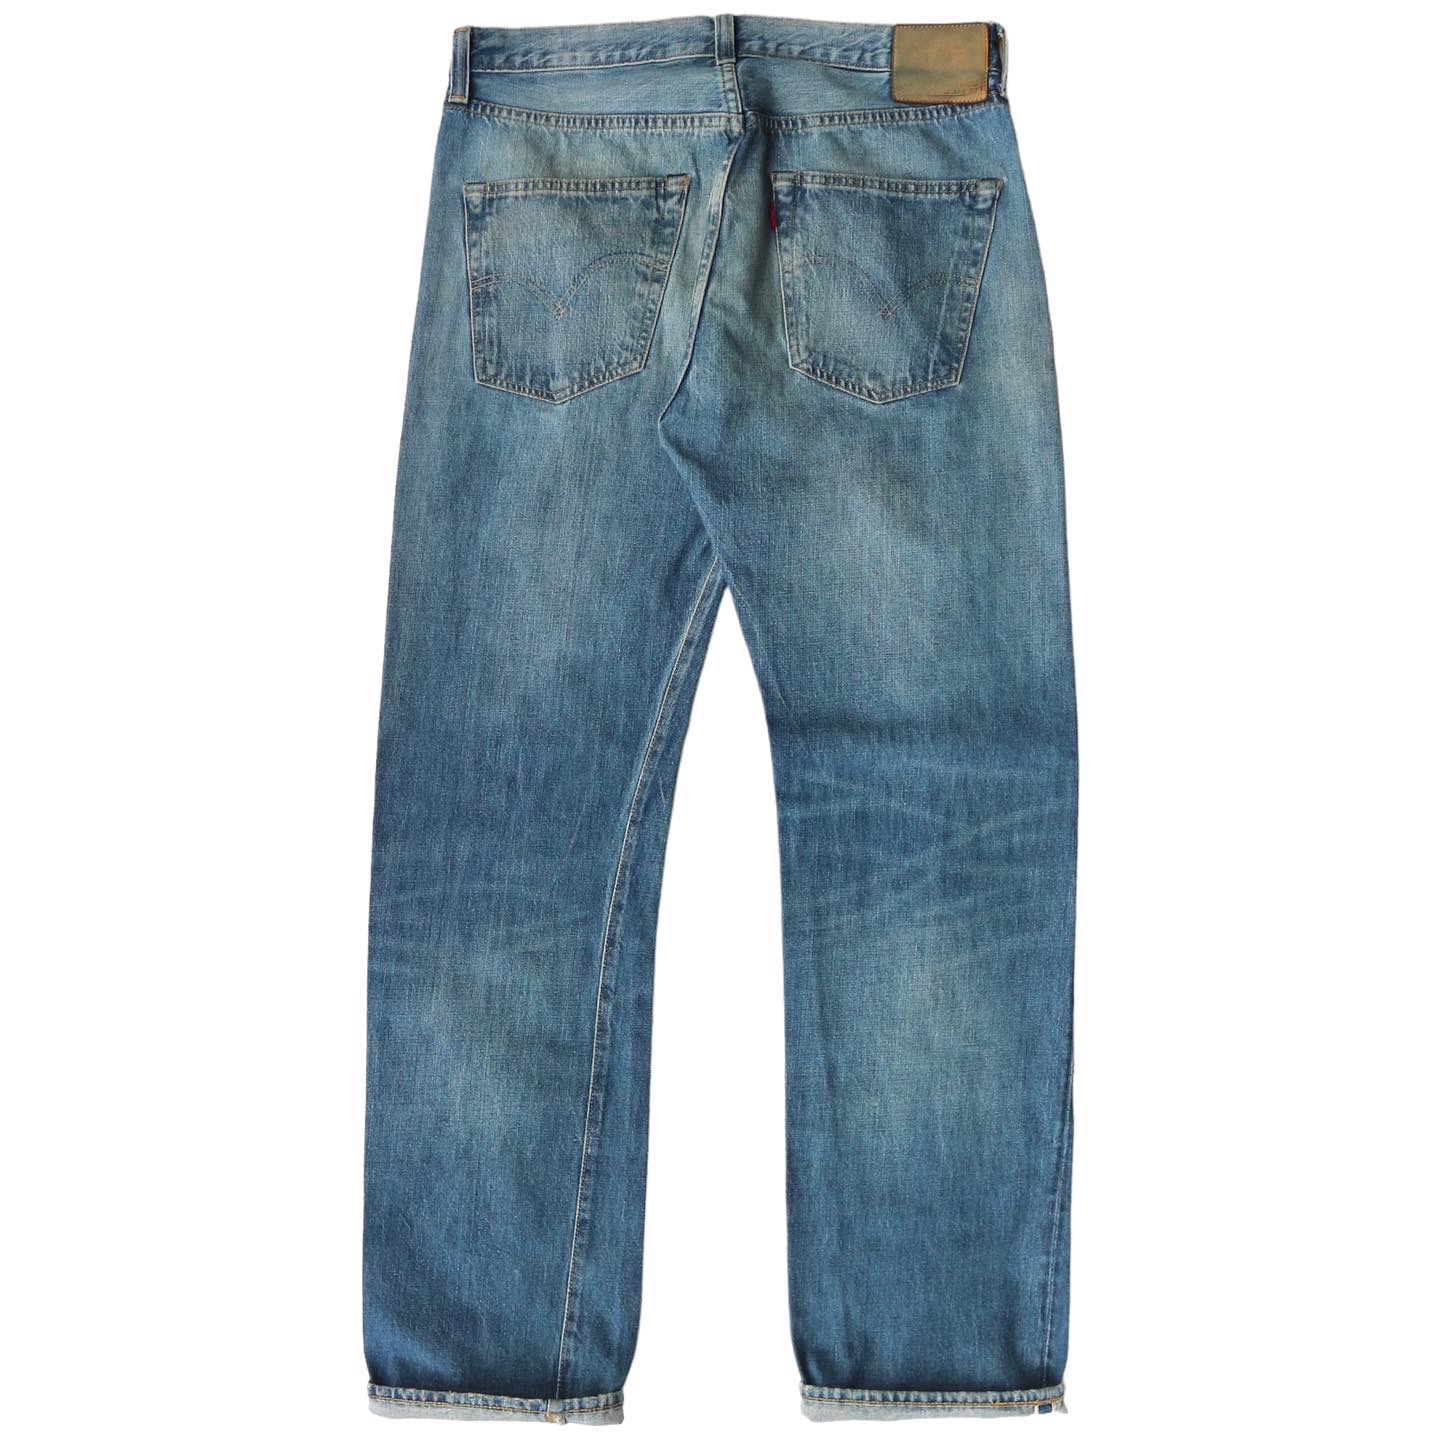 LEVI’S VINTAGE CLOTHING Selvedge Denim Jeans Size 33